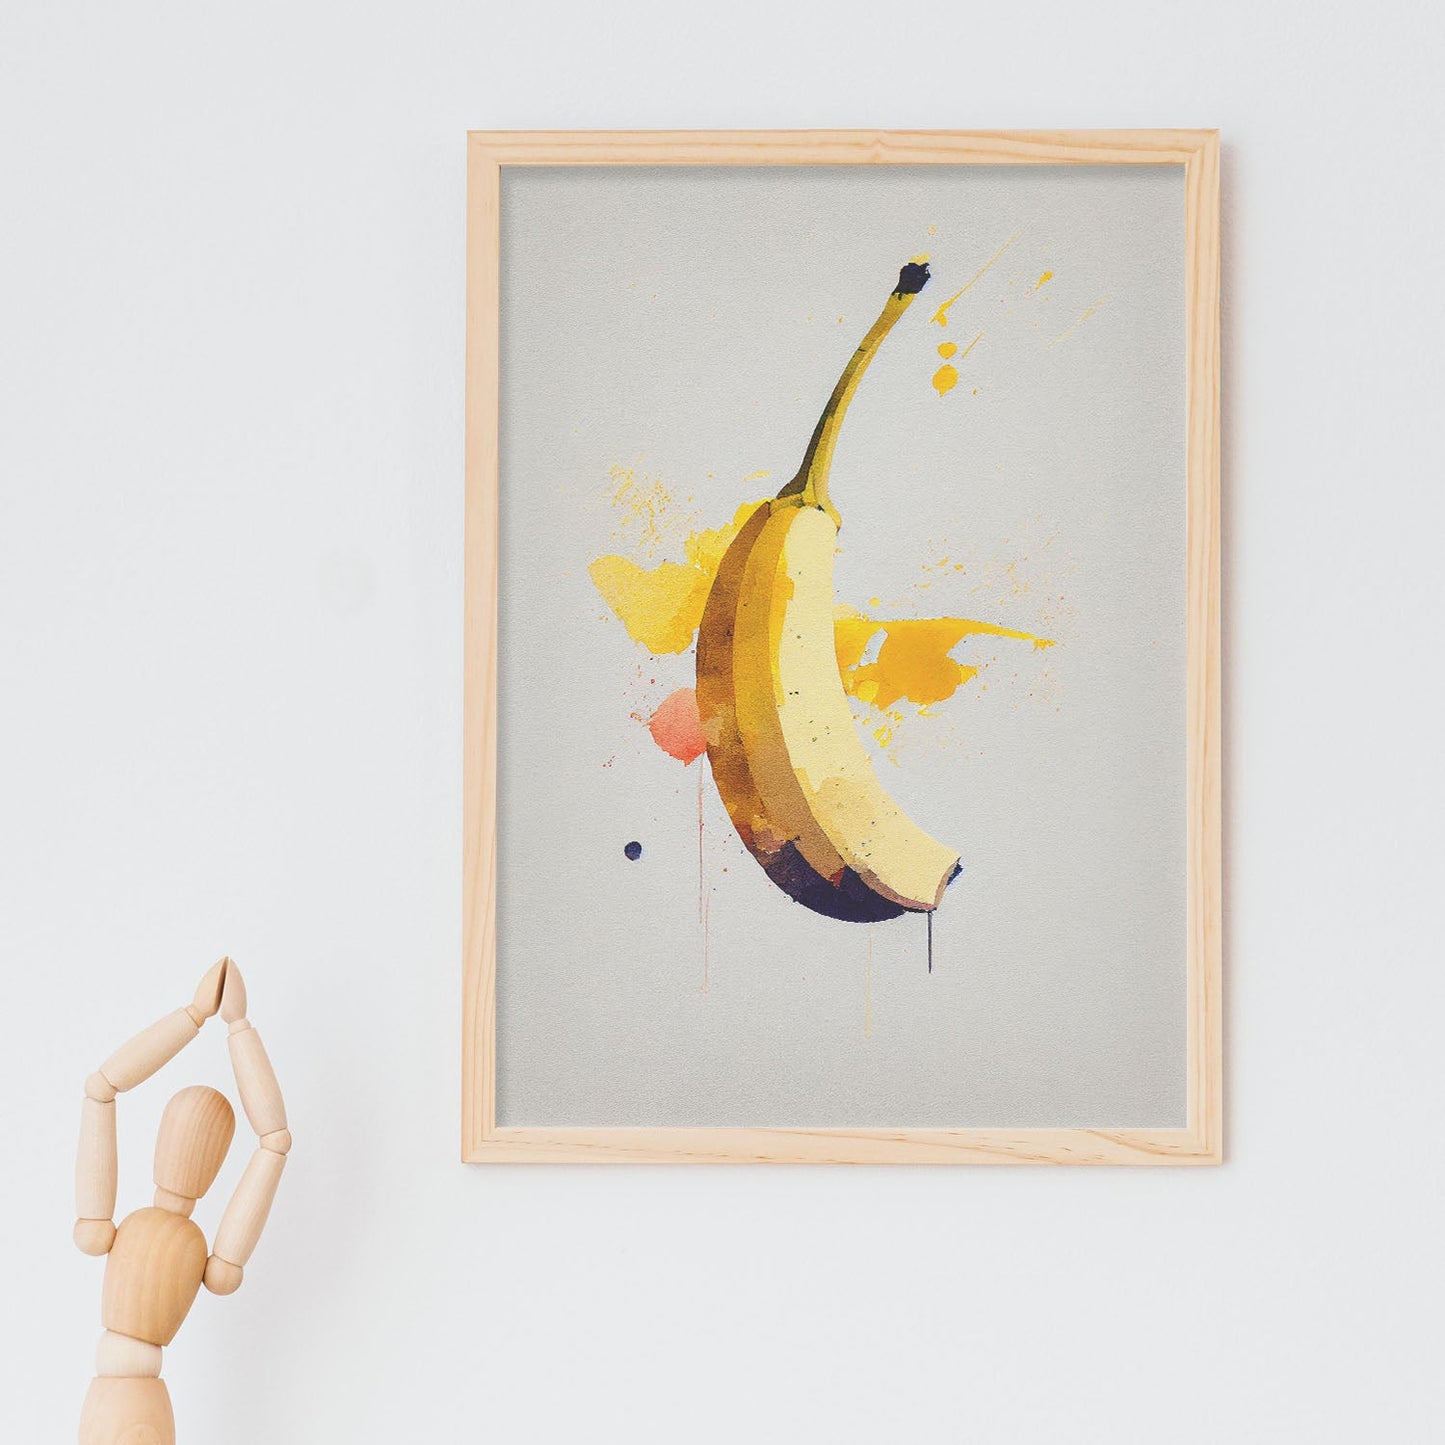 Nacnic minimalist Bananasplit. Aesthetic Wall Art Prints for Bedroom or Living Room Design.